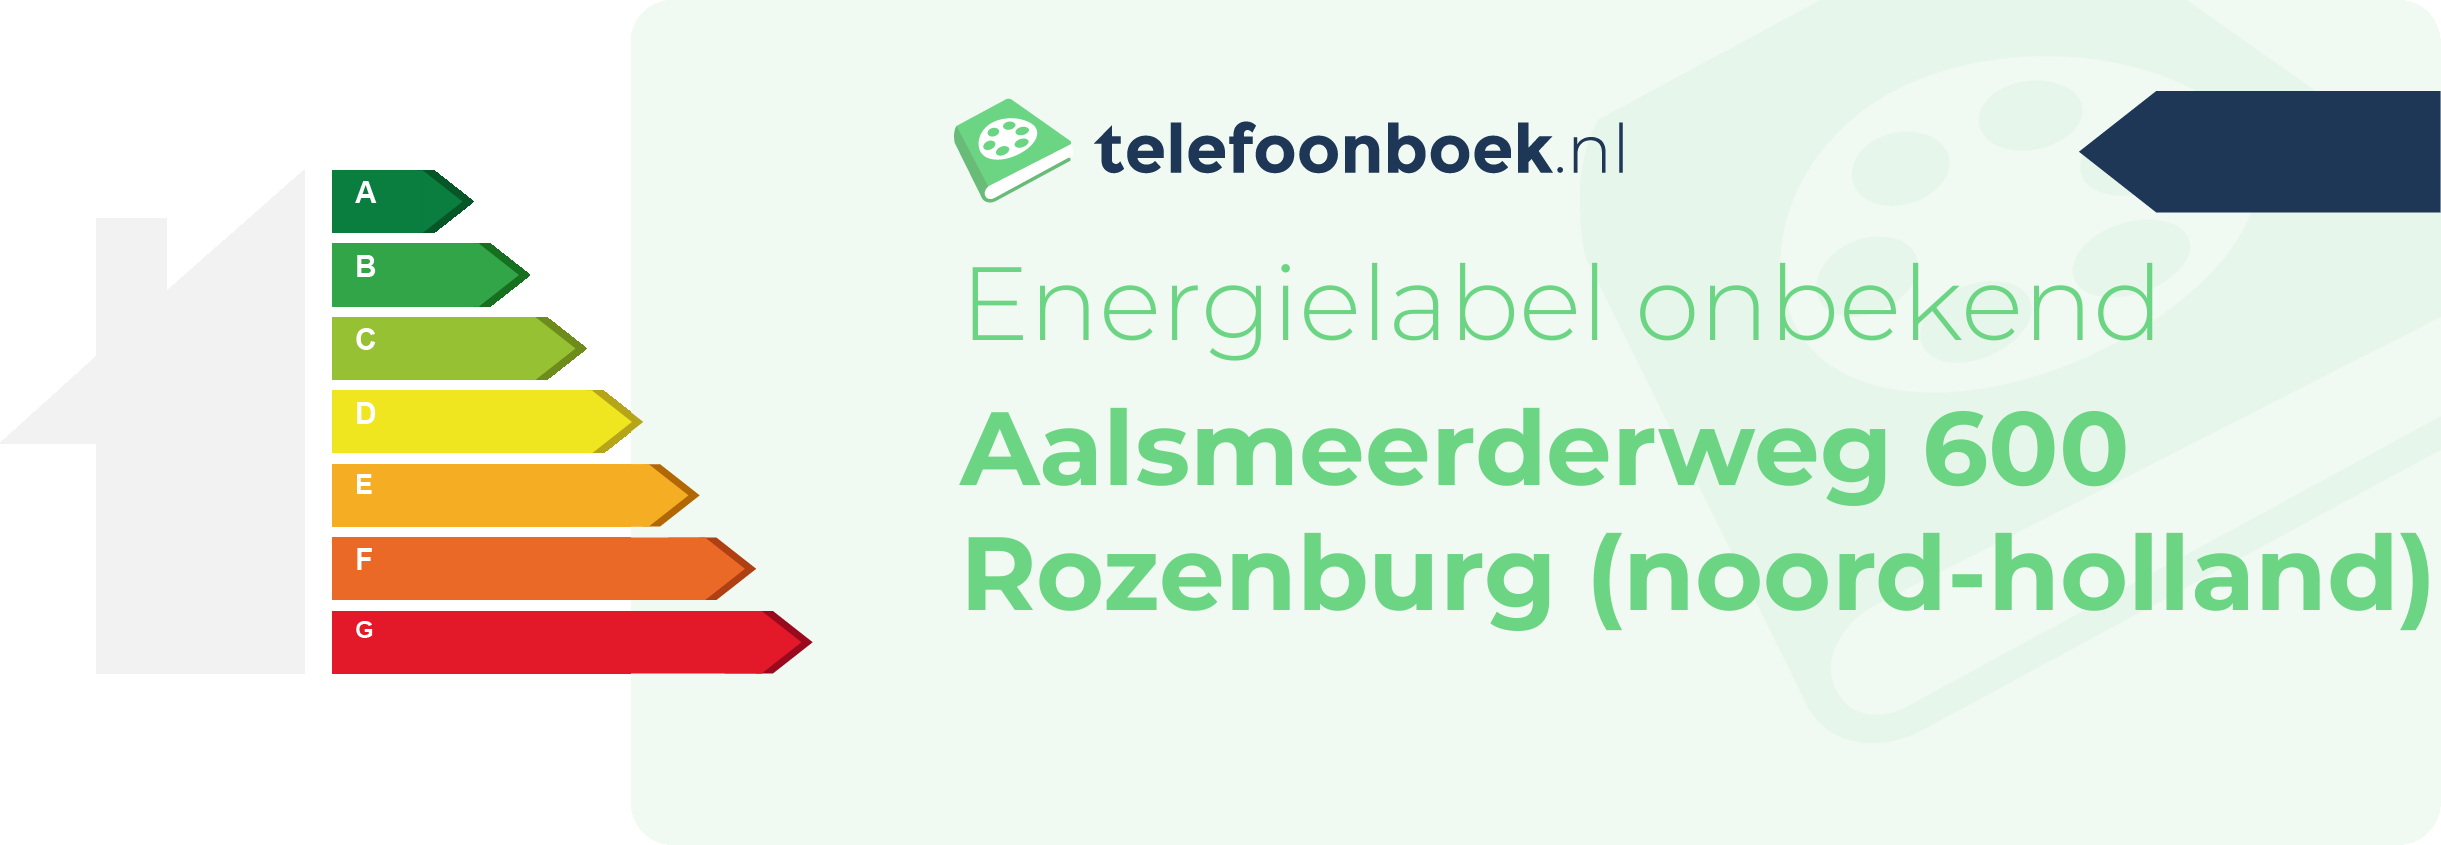 Energielabel Aalsmeerderweg 600 Rozenburg (Noord-Holland)